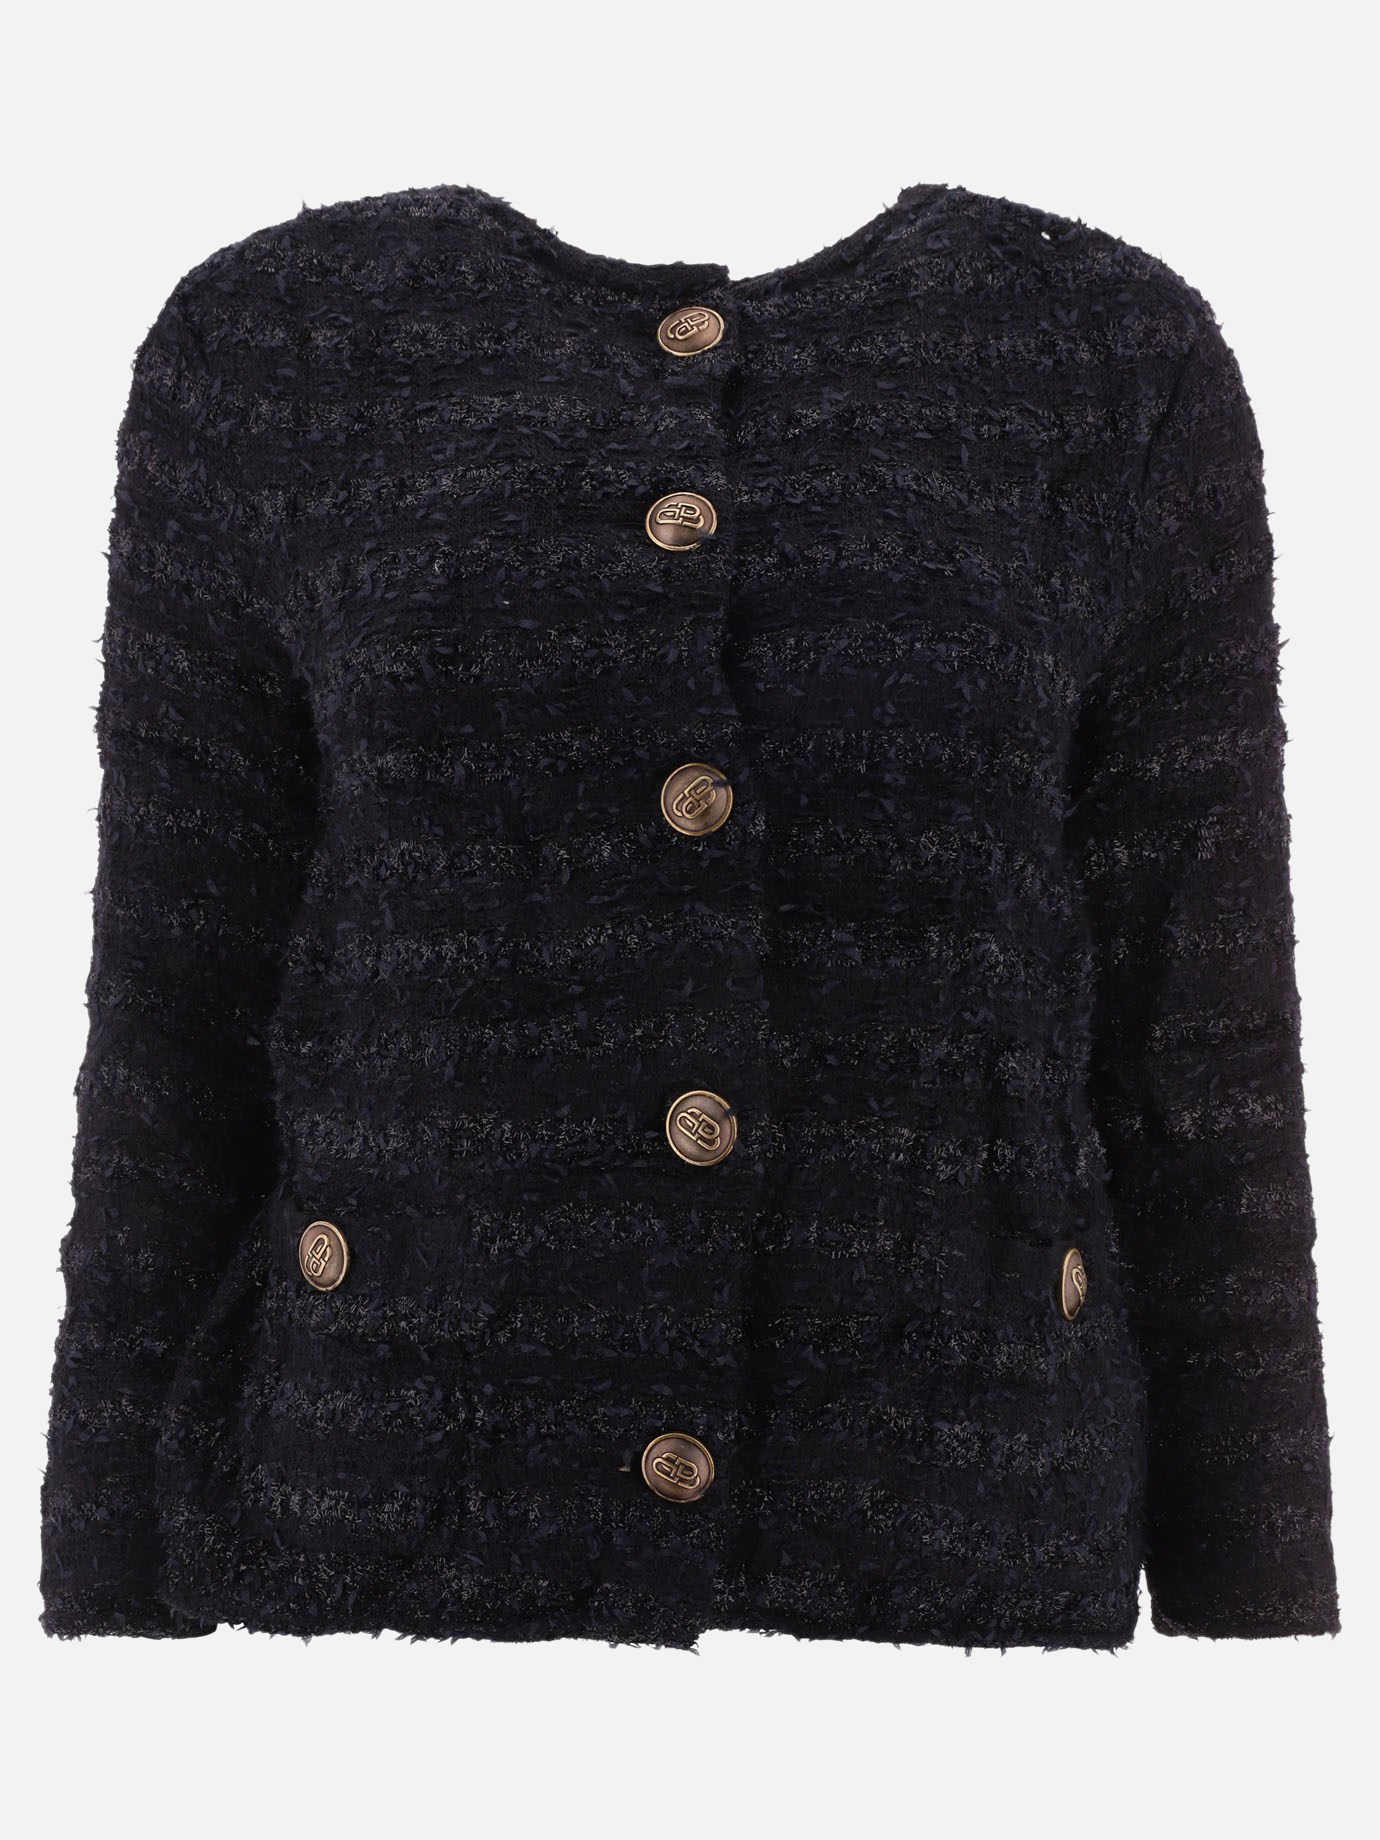 Jack Martin Ash Black Wool Tweed Double Breasted Waistcoat 